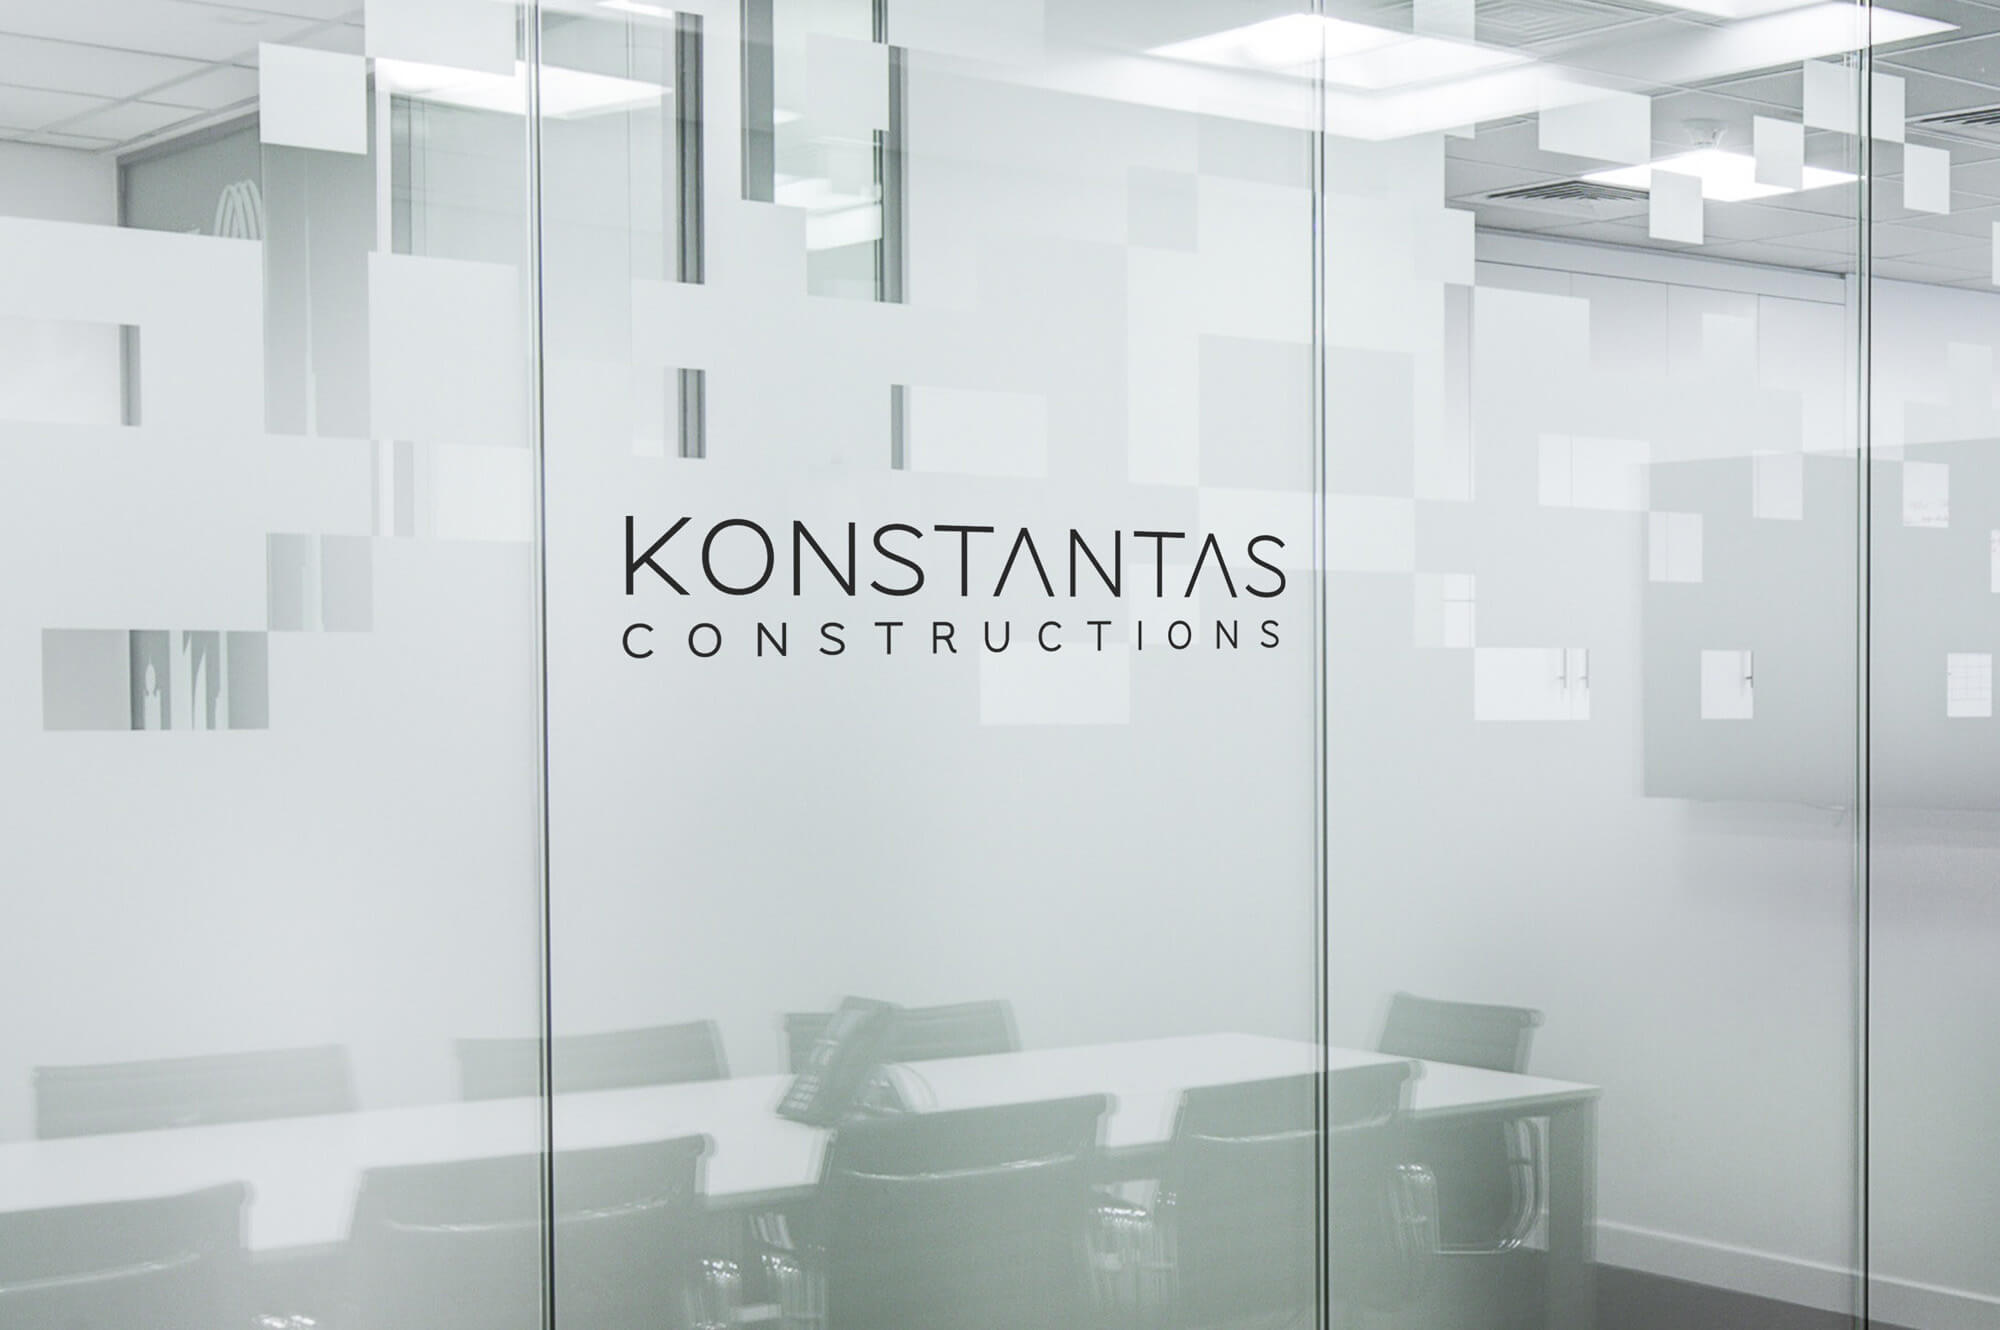 Konstantas Renovation logo in a meeting room